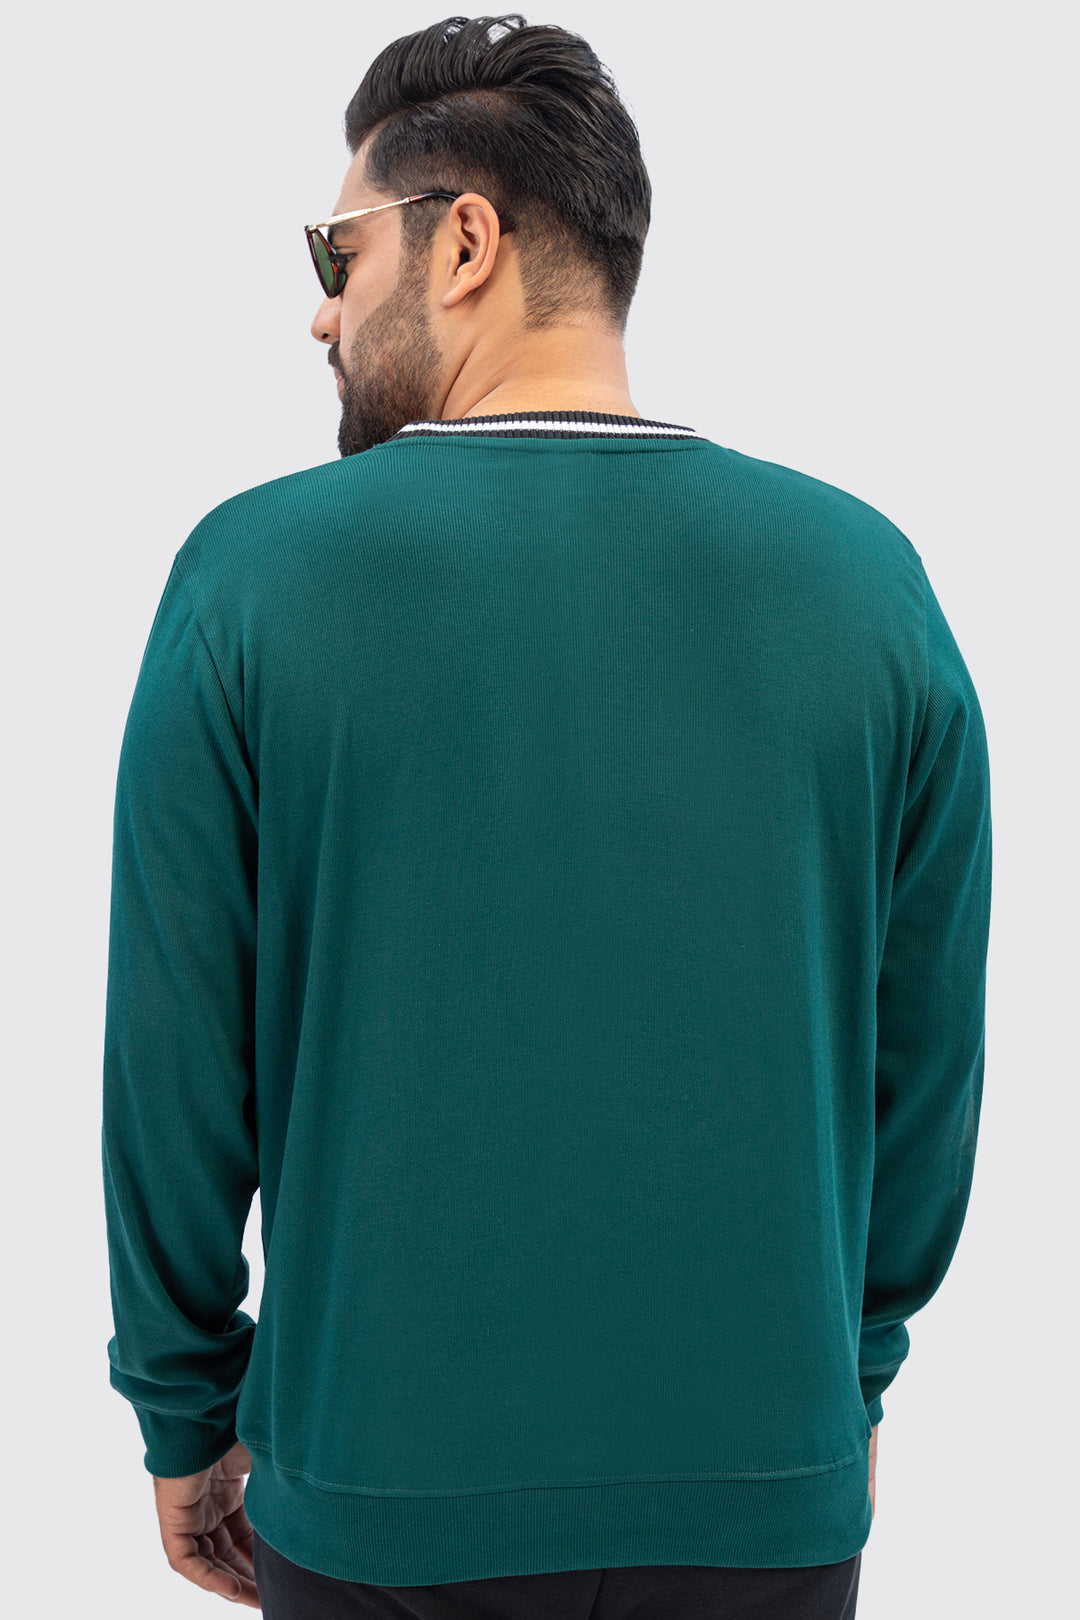 Dark Teal Contrast Rib Sweatshirt (Plus Size) - W23 - MSW080P